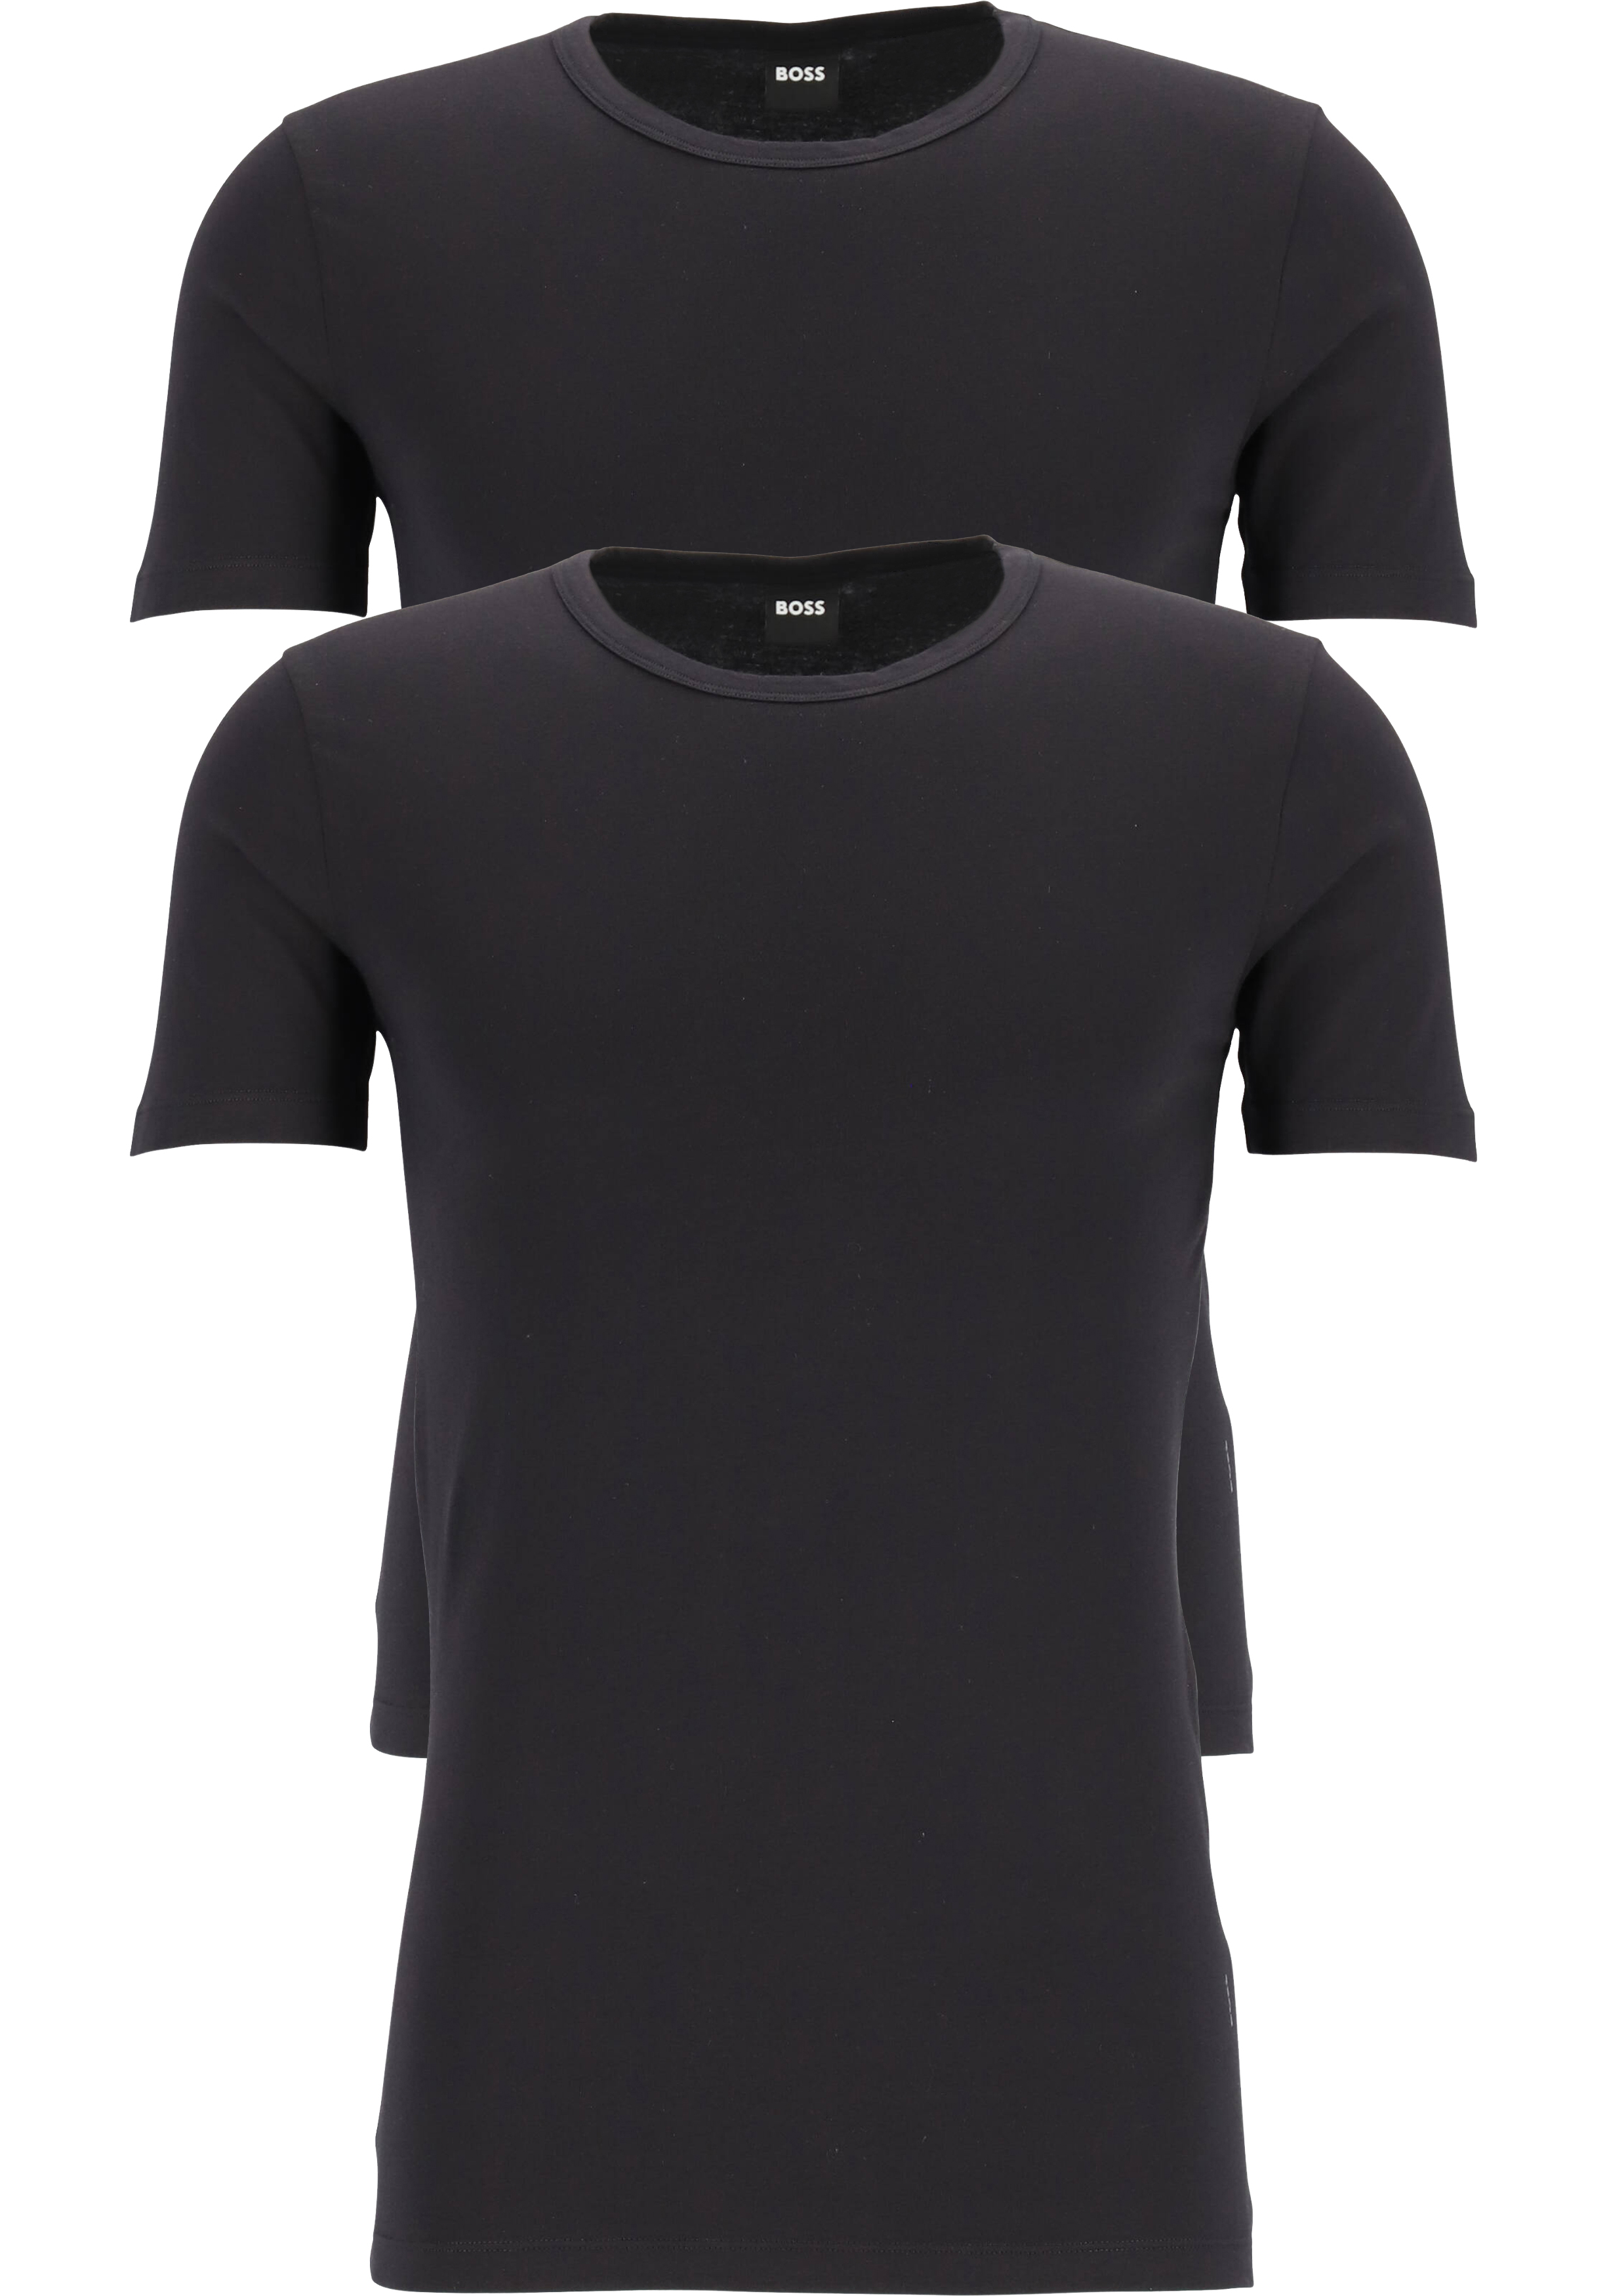 HUGO BOSS Modern stretch T-shirts fit (2-pack), heren T-shirts... - Zomer SALE tot 50% korting